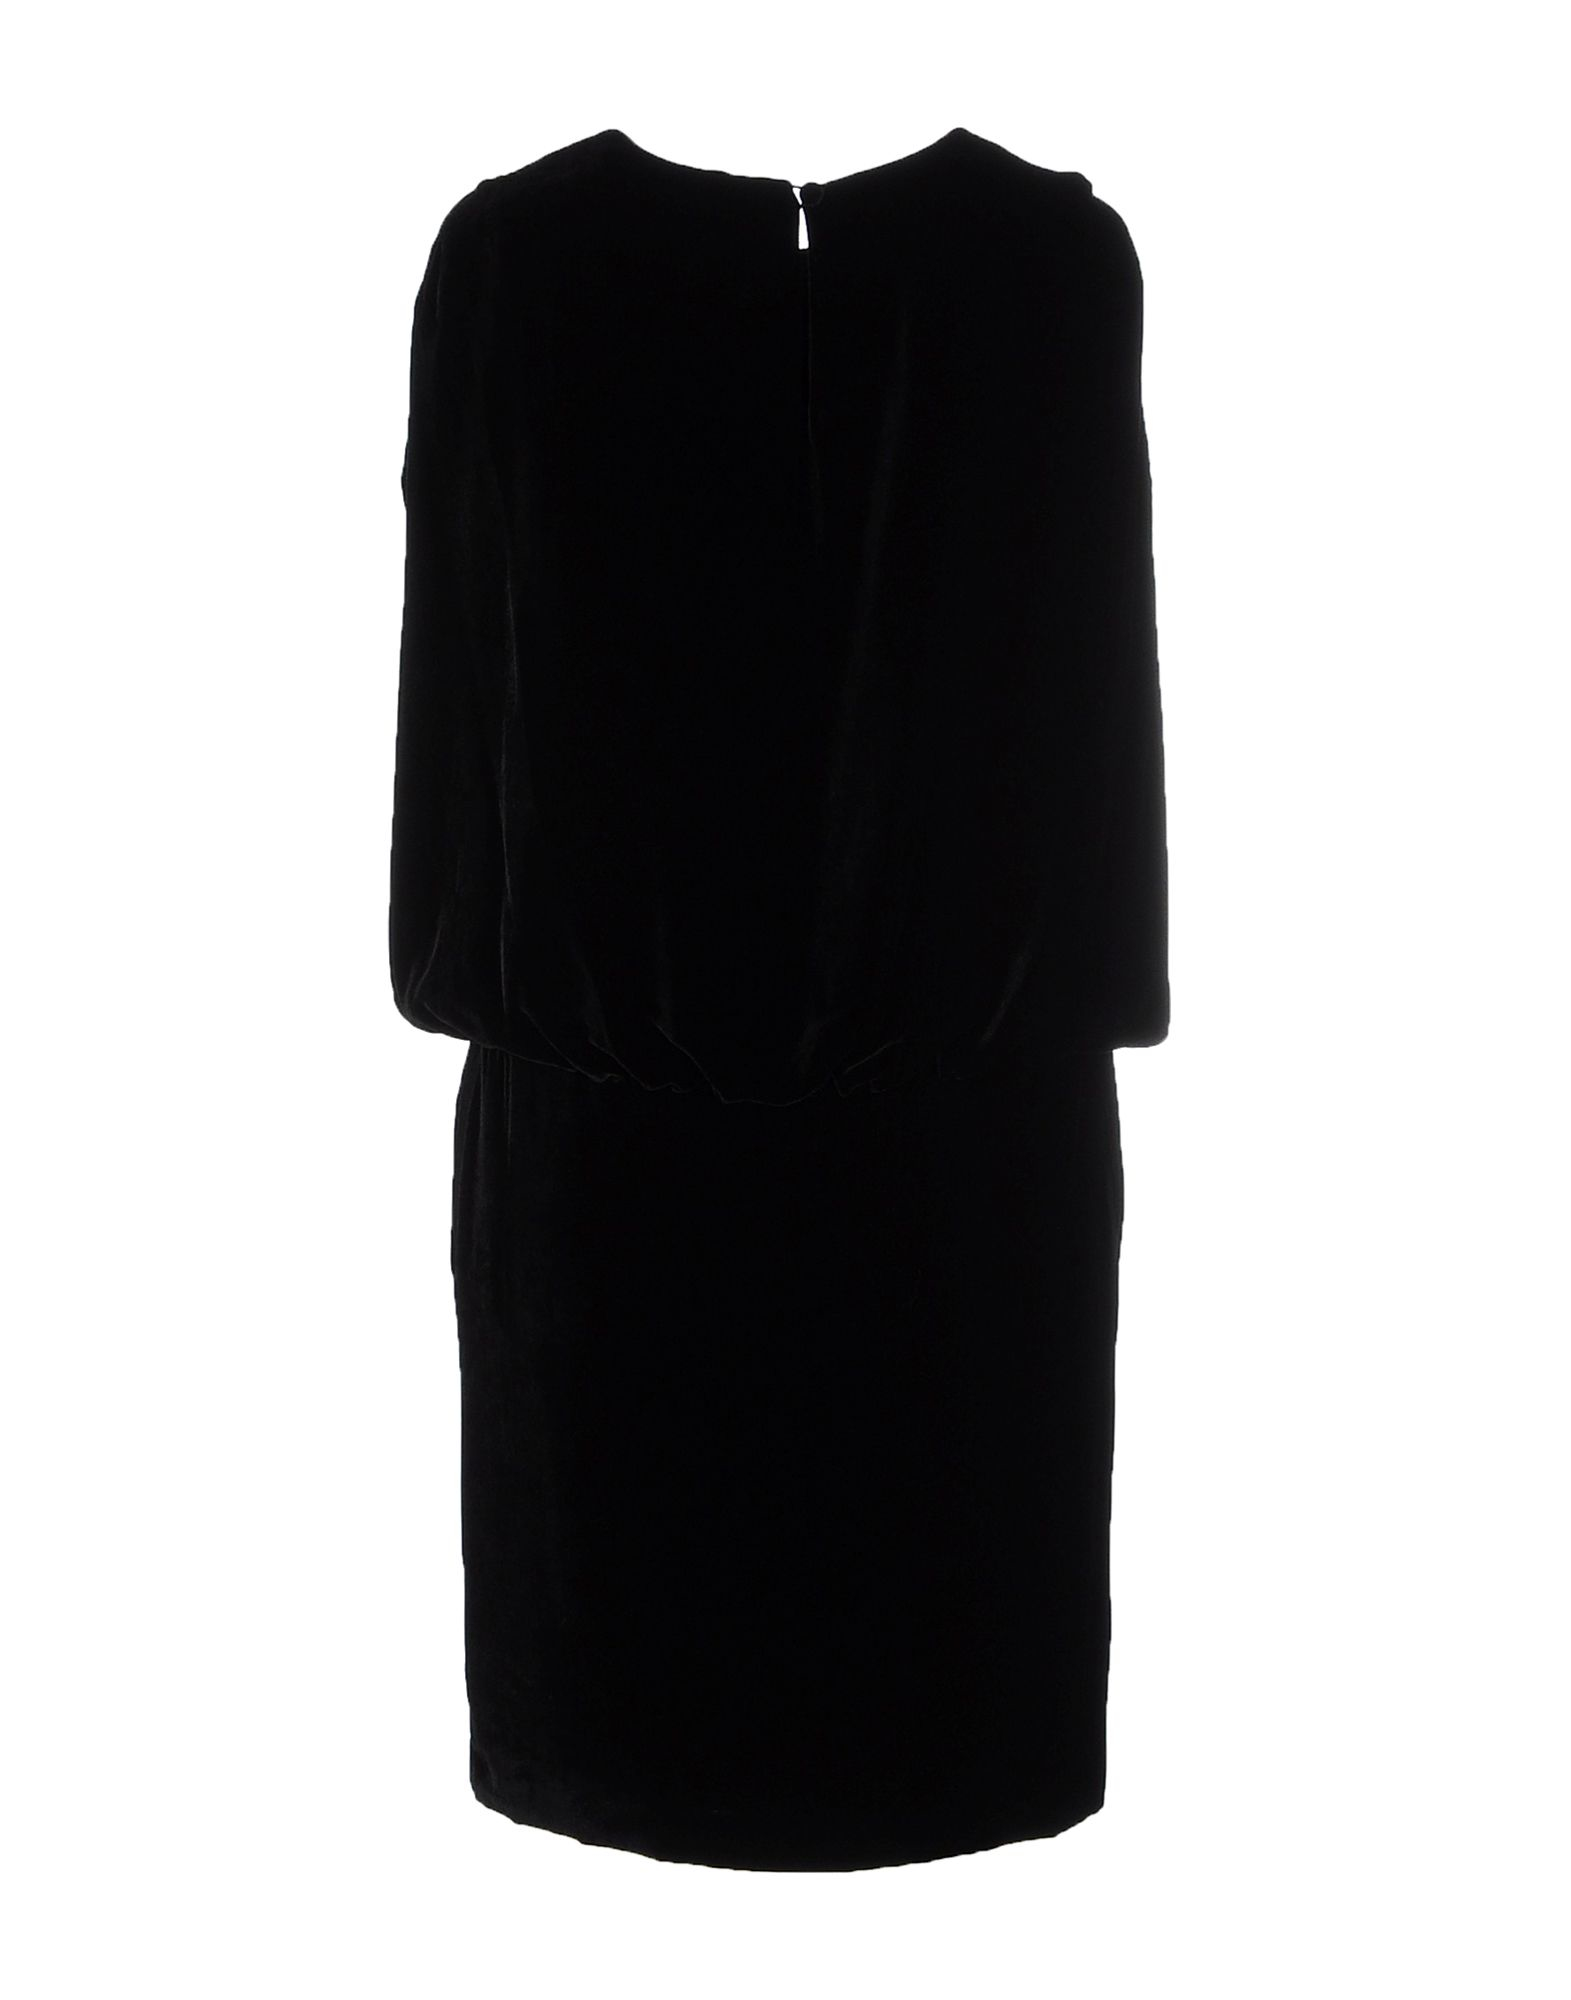 Lyst - Fendi Short Dress in Black